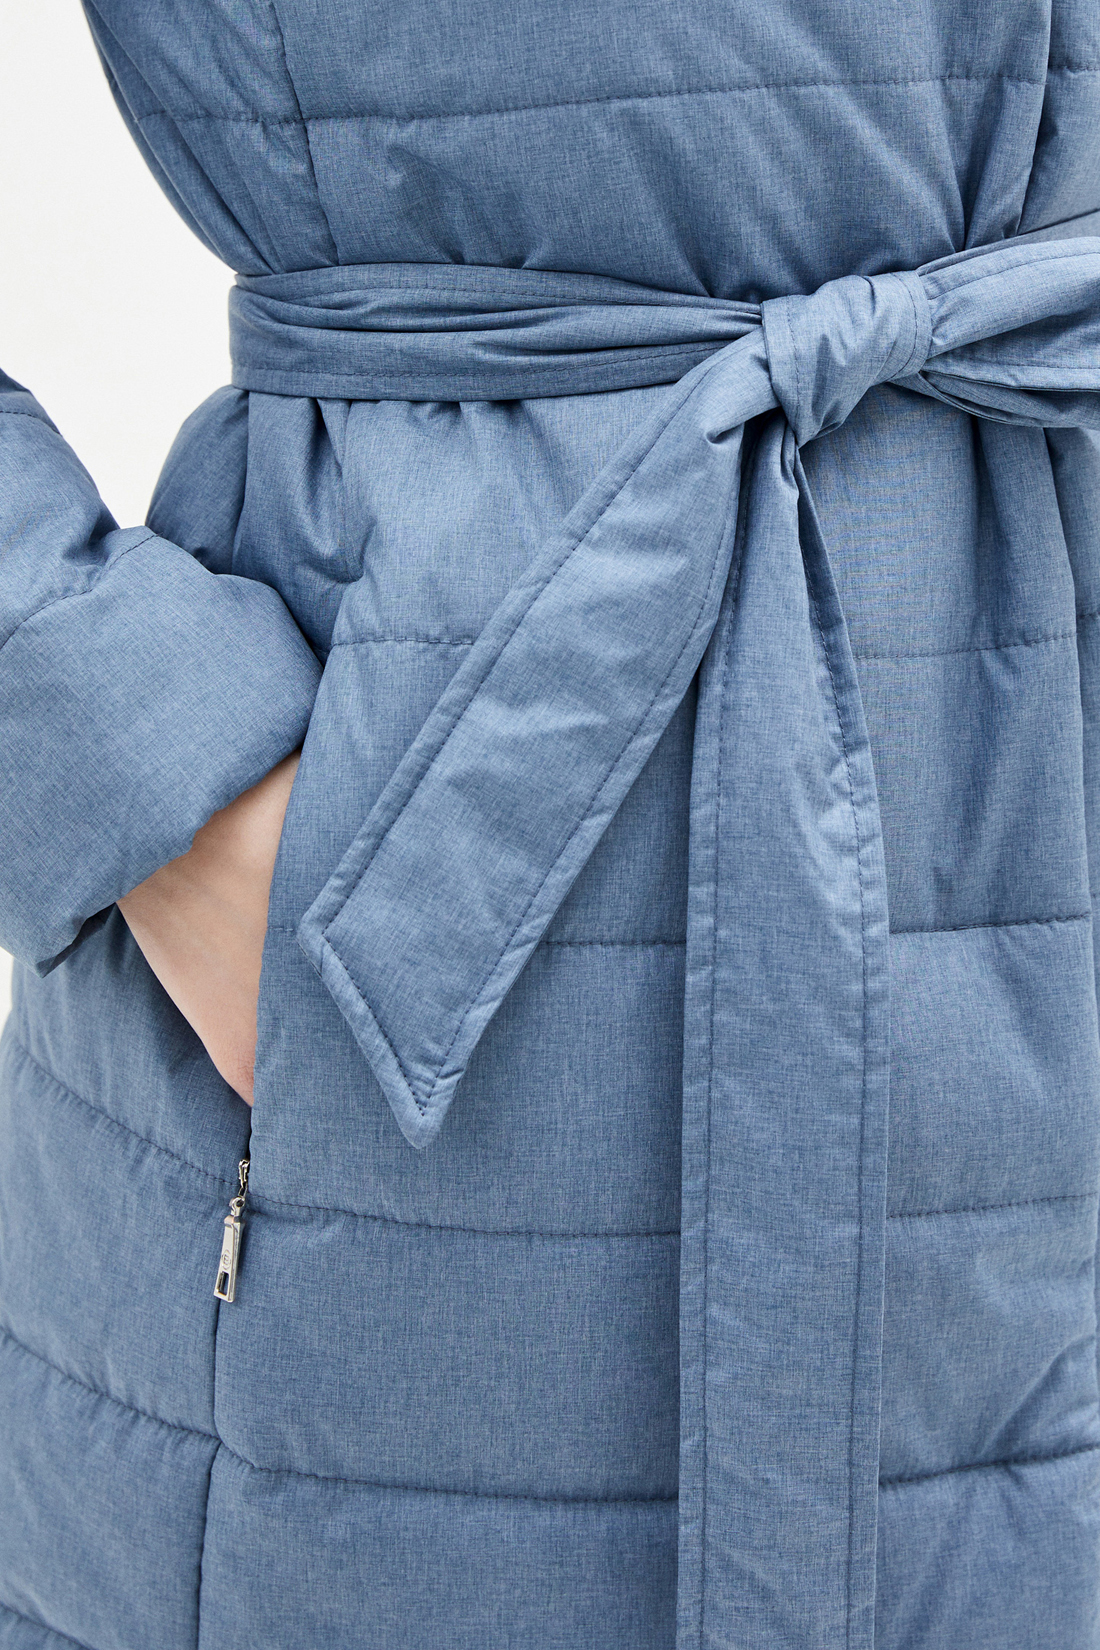 Куртка с поясом (арт. baon B030038), размер M, цвет синий Куртка с поясом (арт. baon B030038) - фото 3